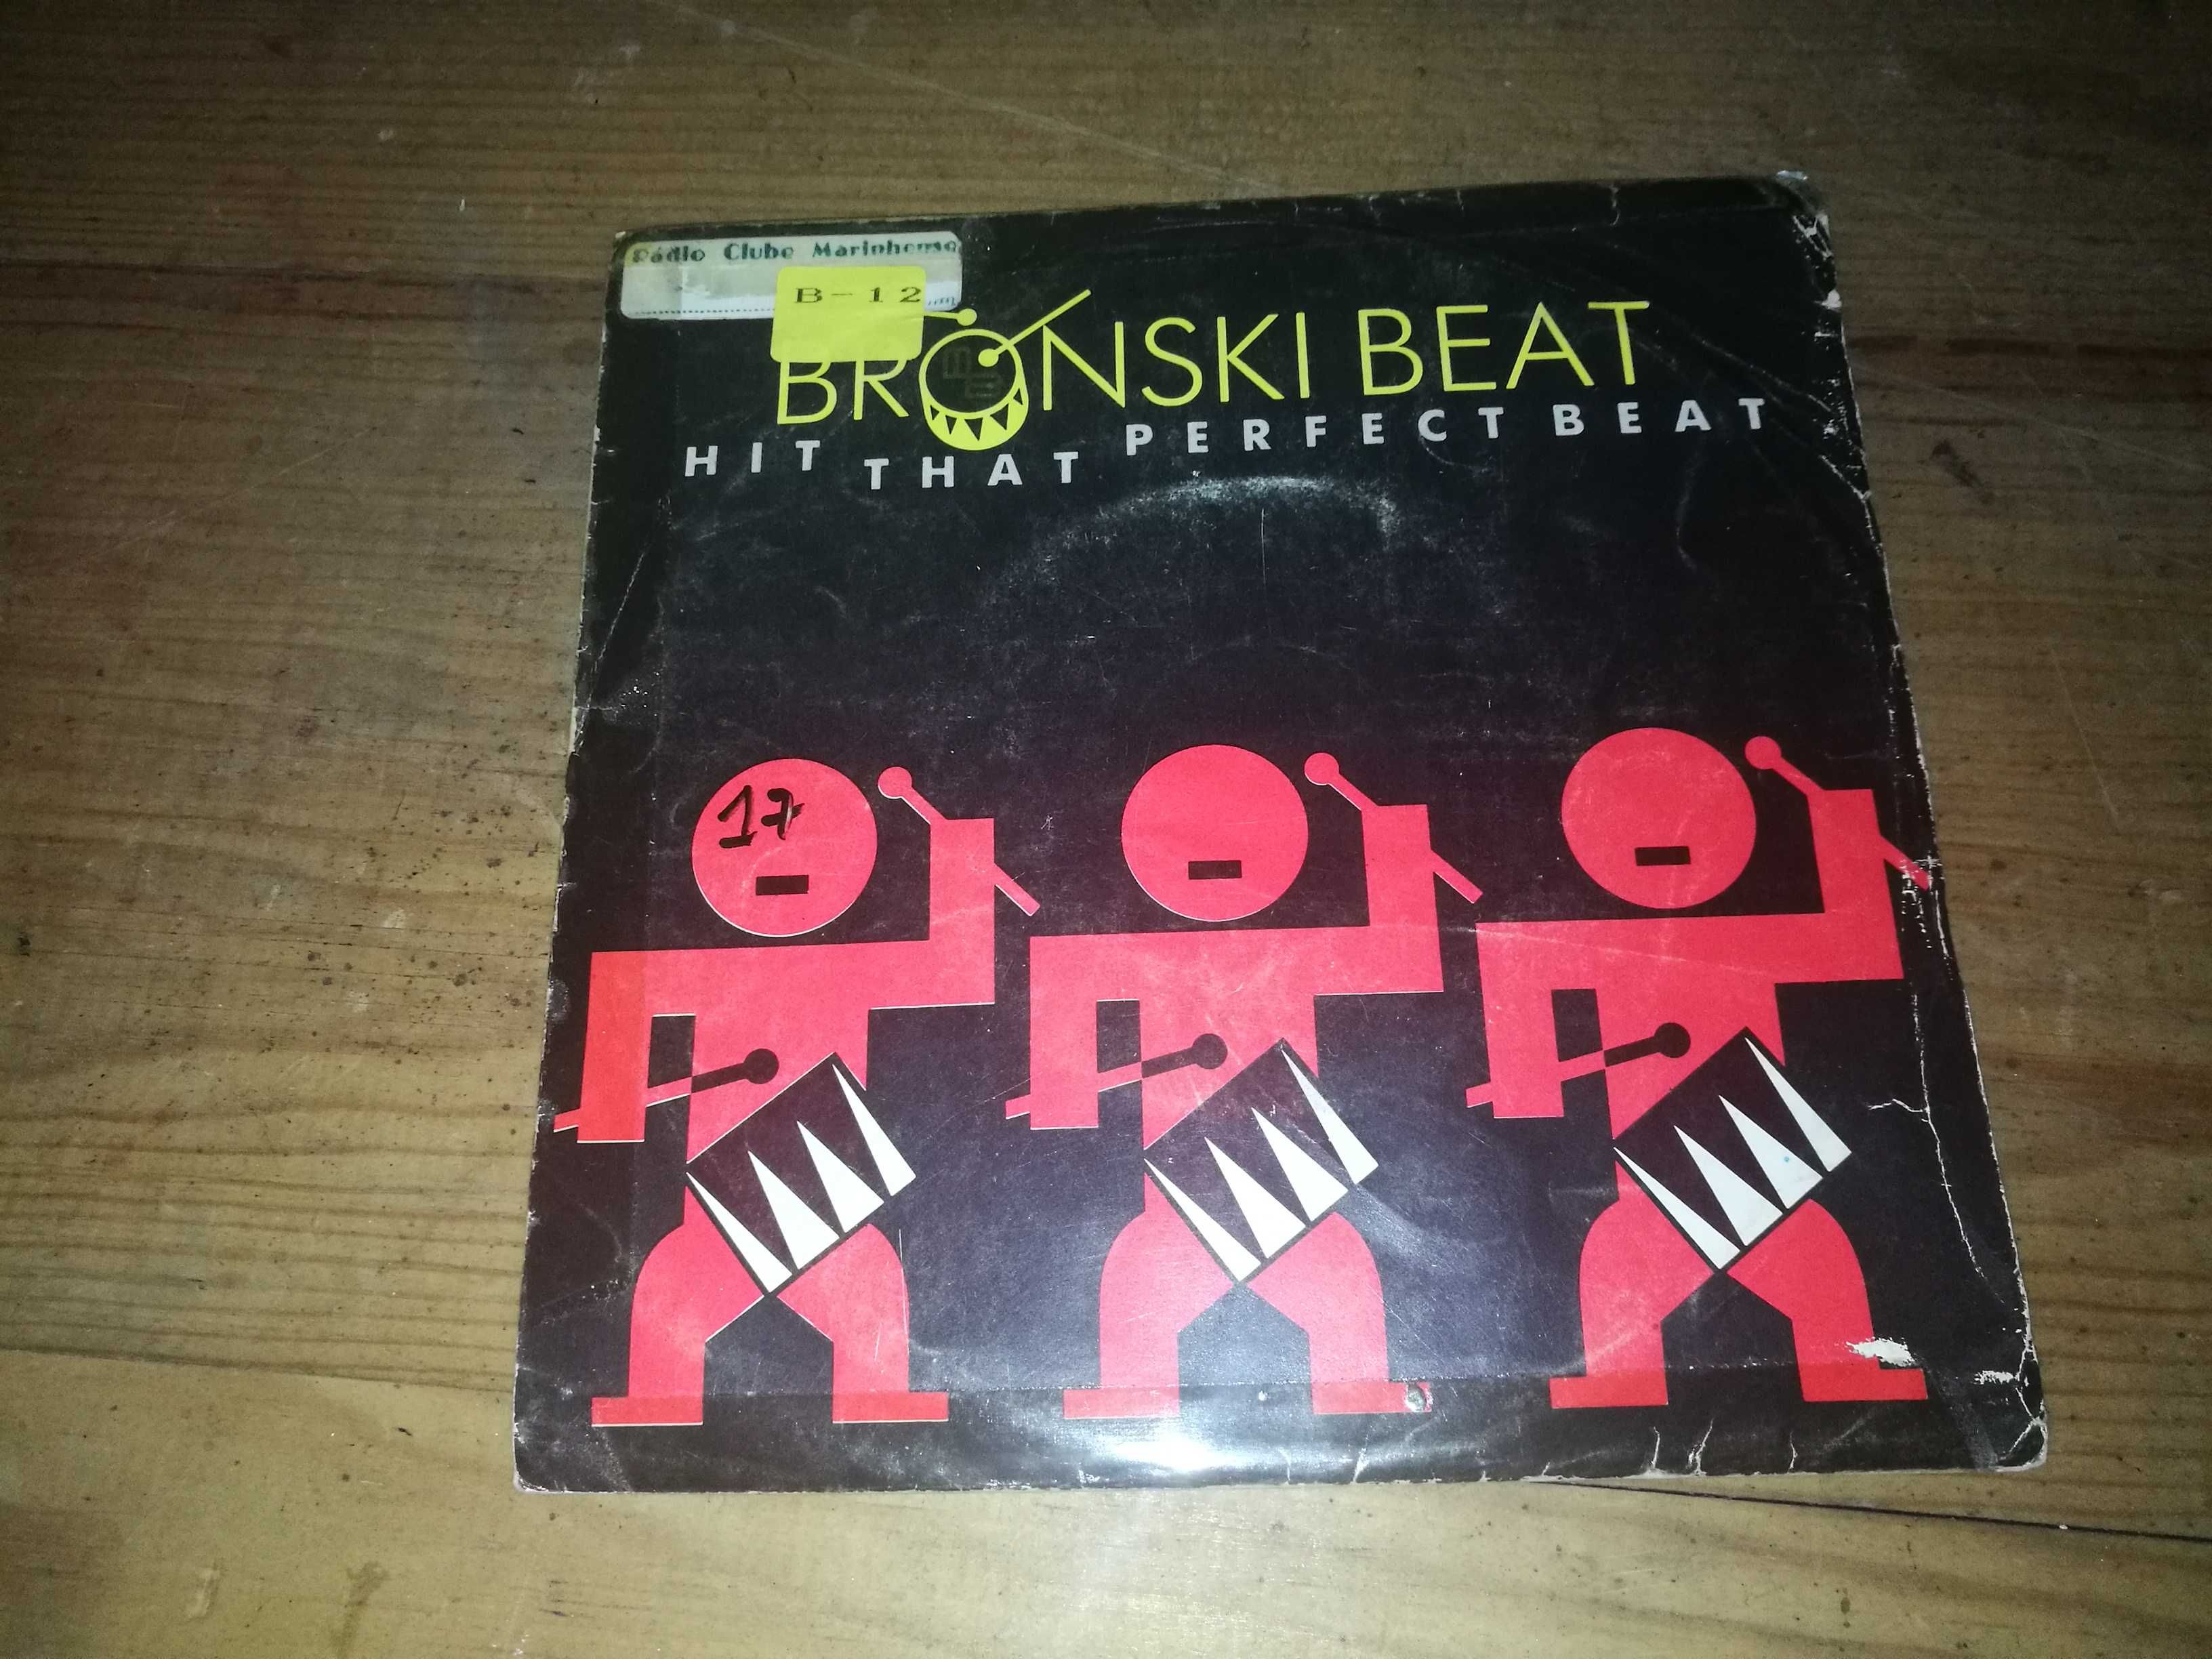 Bronski Beat - Hit That perfect Beat SINGLE